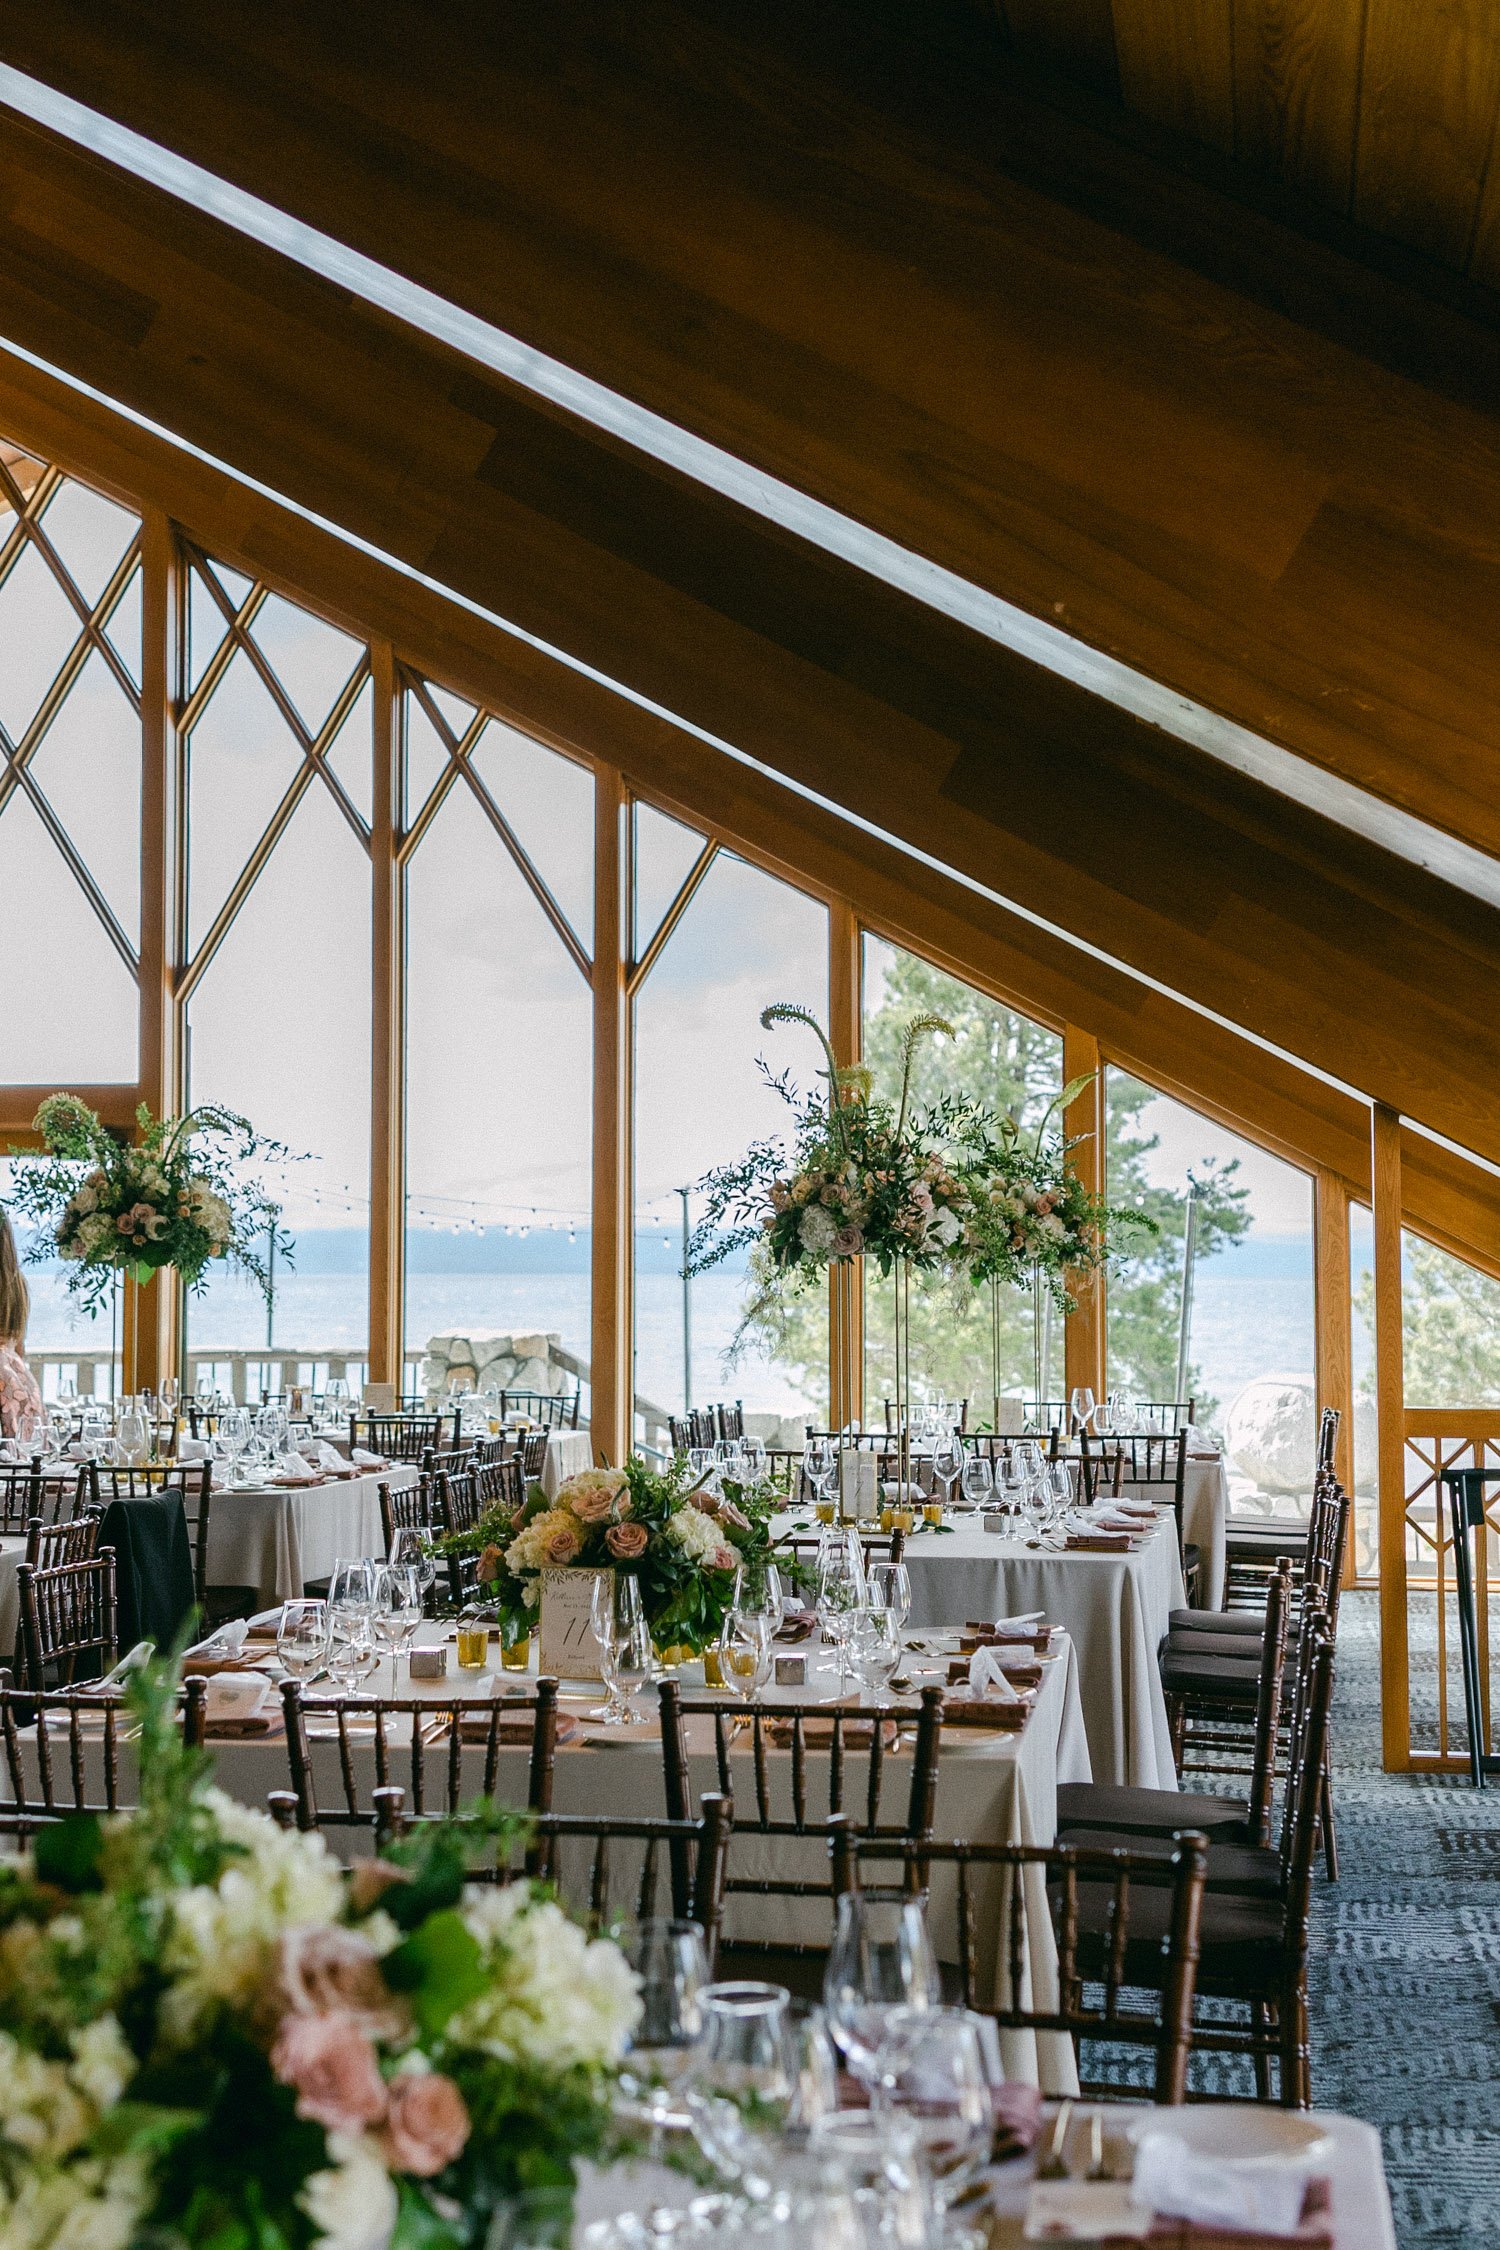 Edgewood Tahoe Wedding photos: photo of "romantic spring on the lake” wedding decor